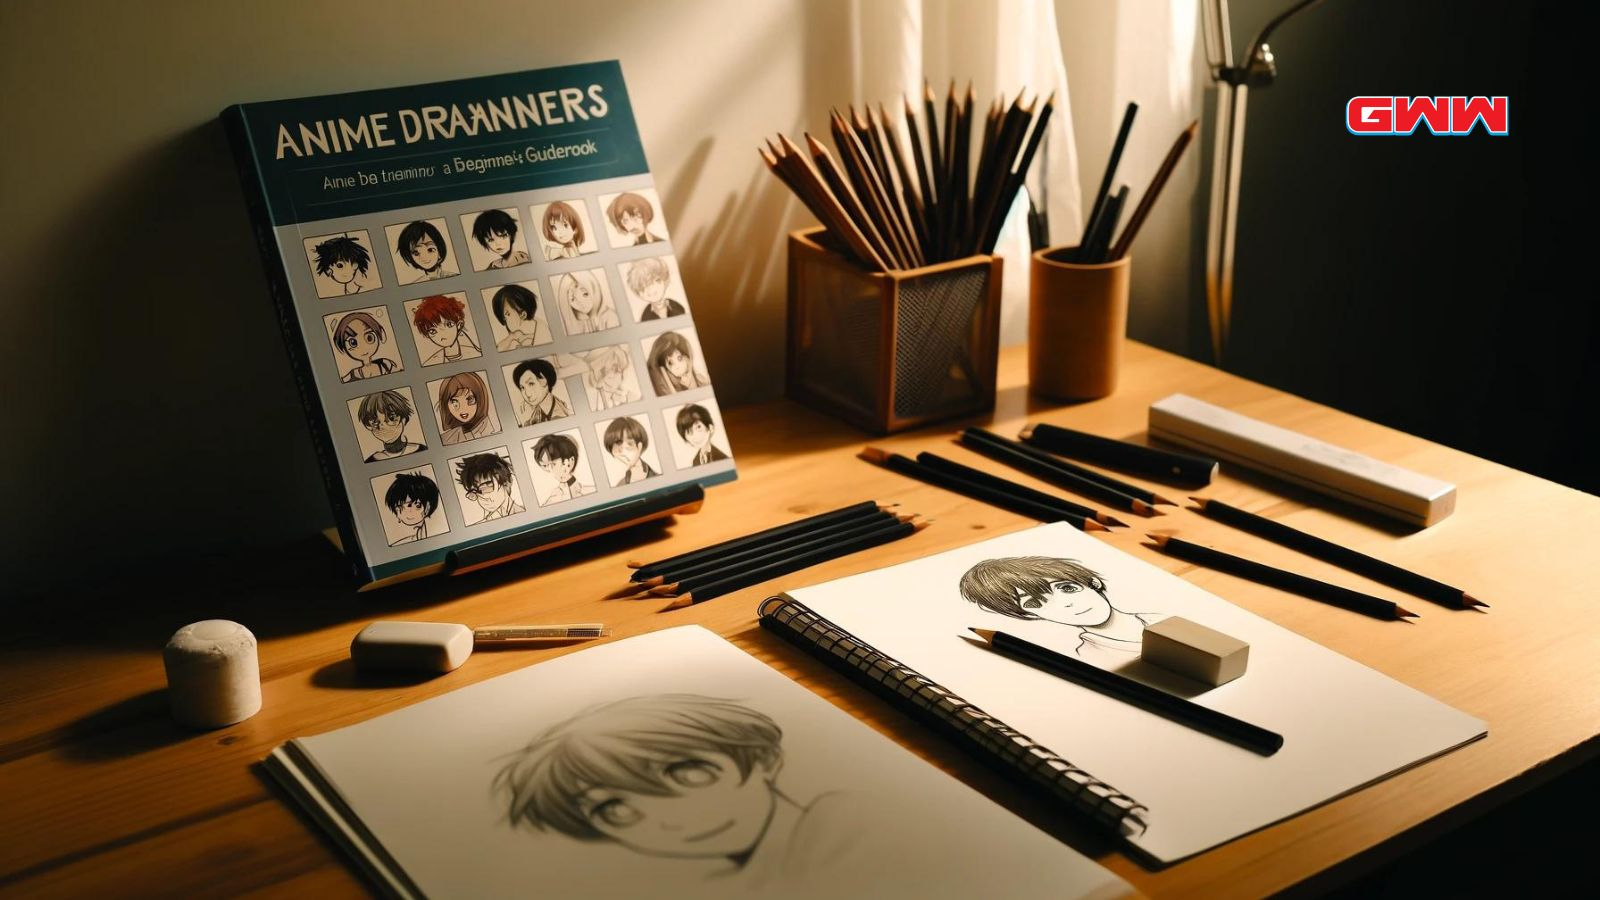 Anime drawings beginner's desk with sketching tools